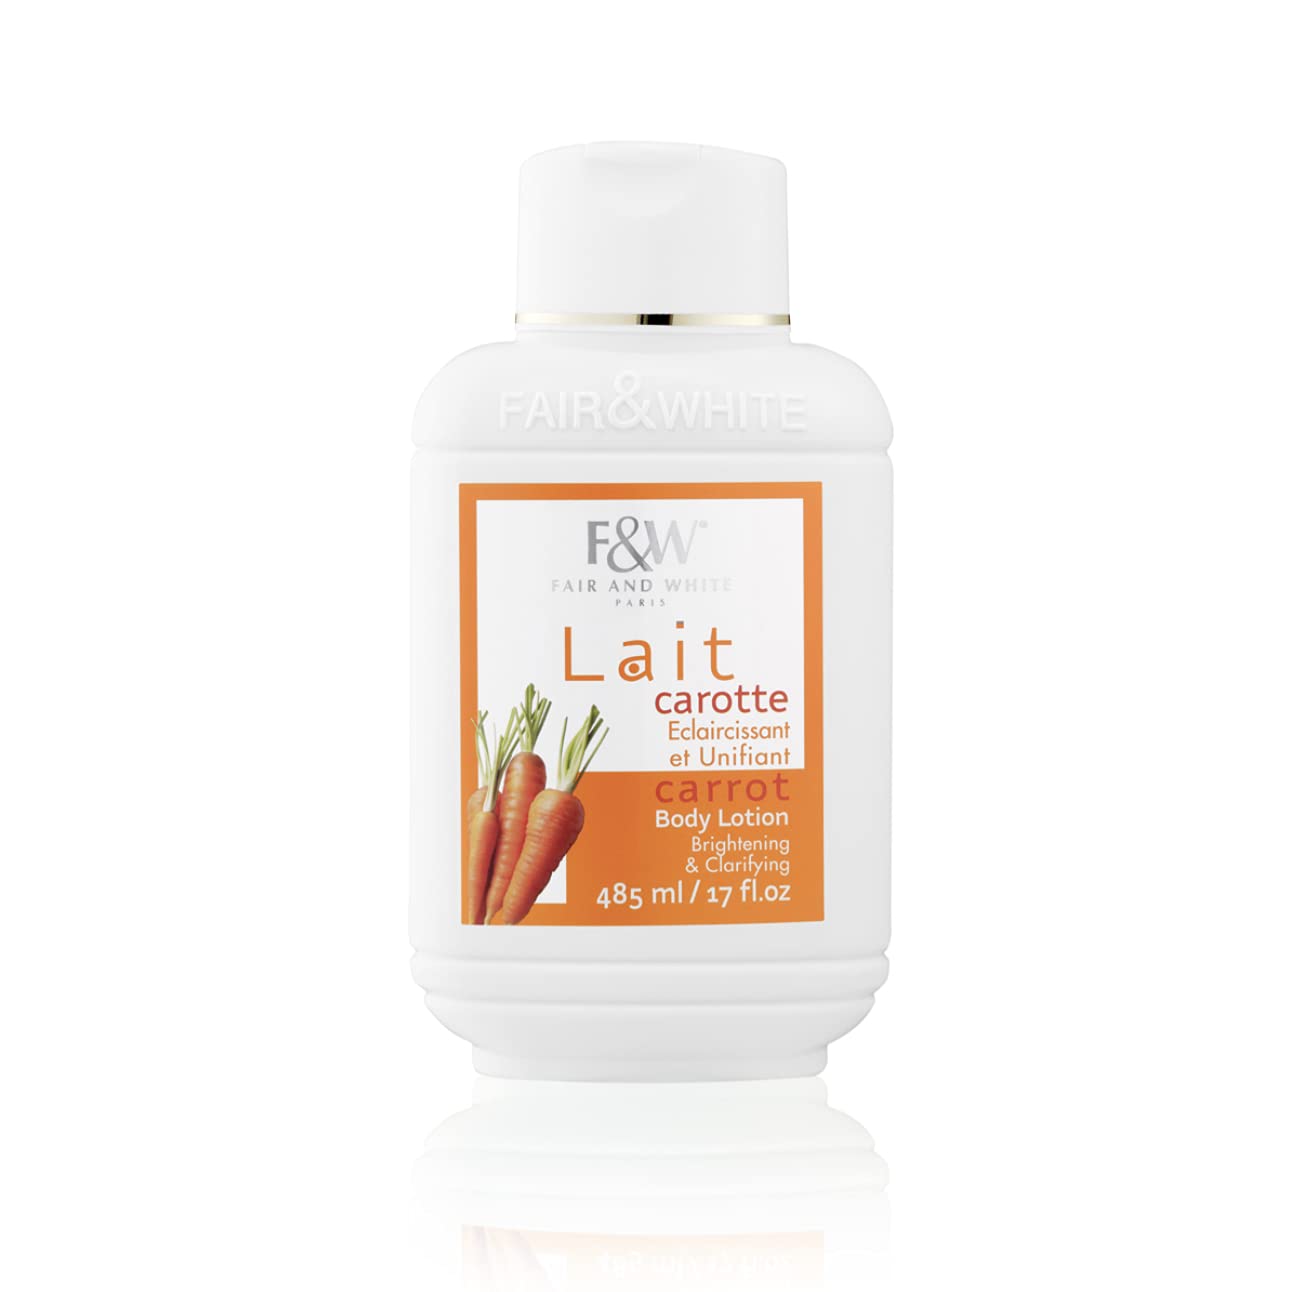 Fair & White Lait Carotte , Carrot Body Lotion. 17oz